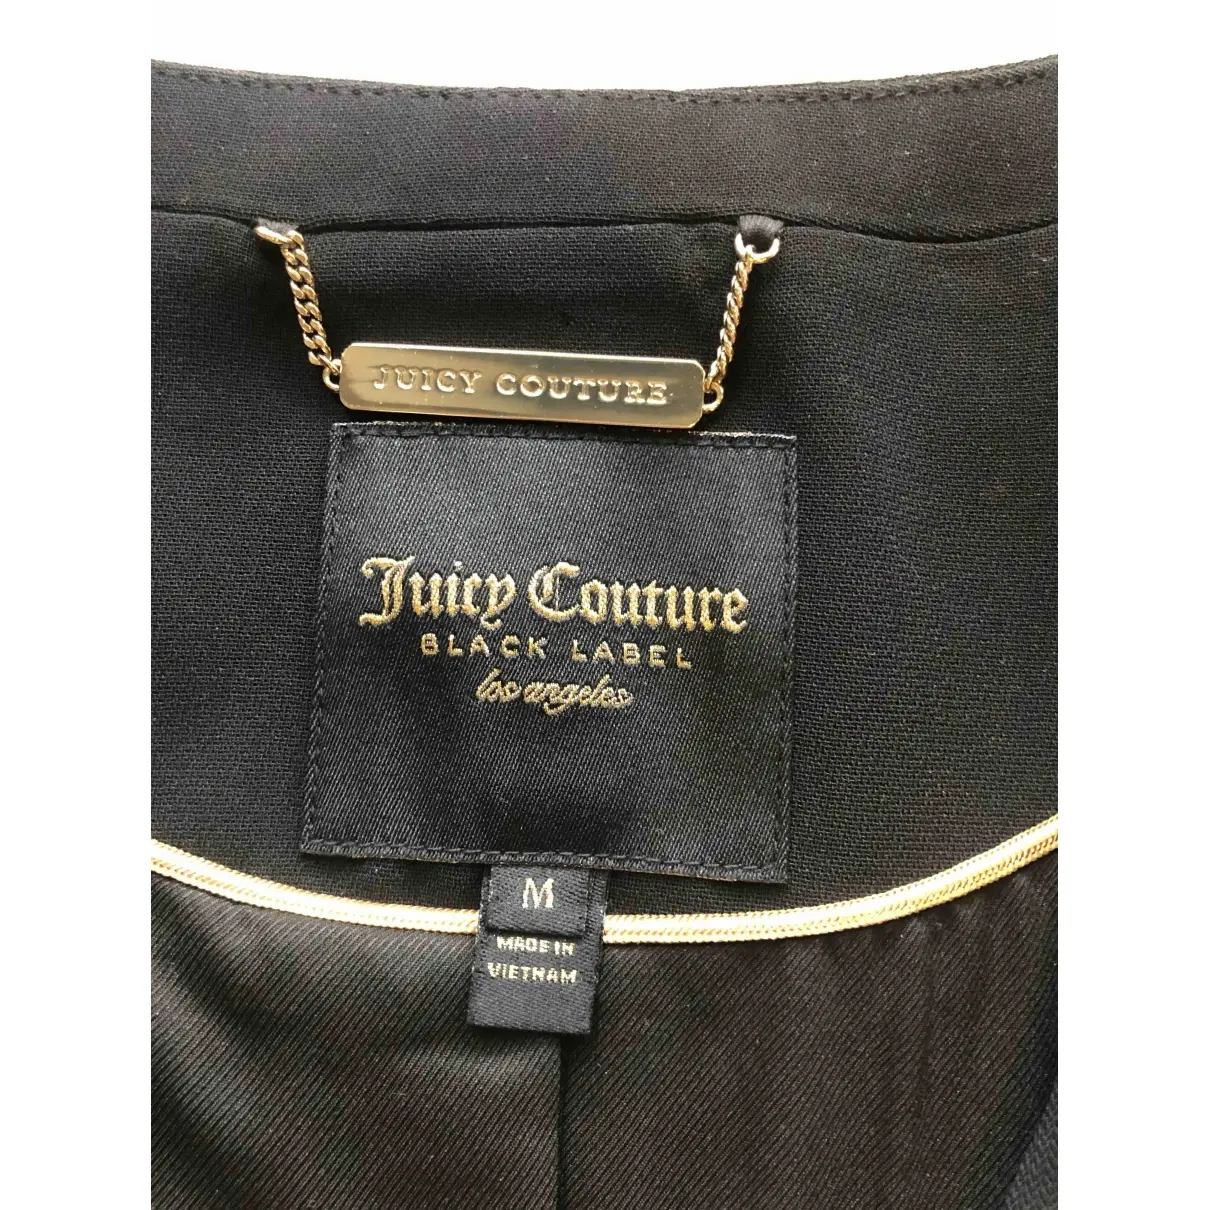 Buy Juicy Couture Tweed jacket online